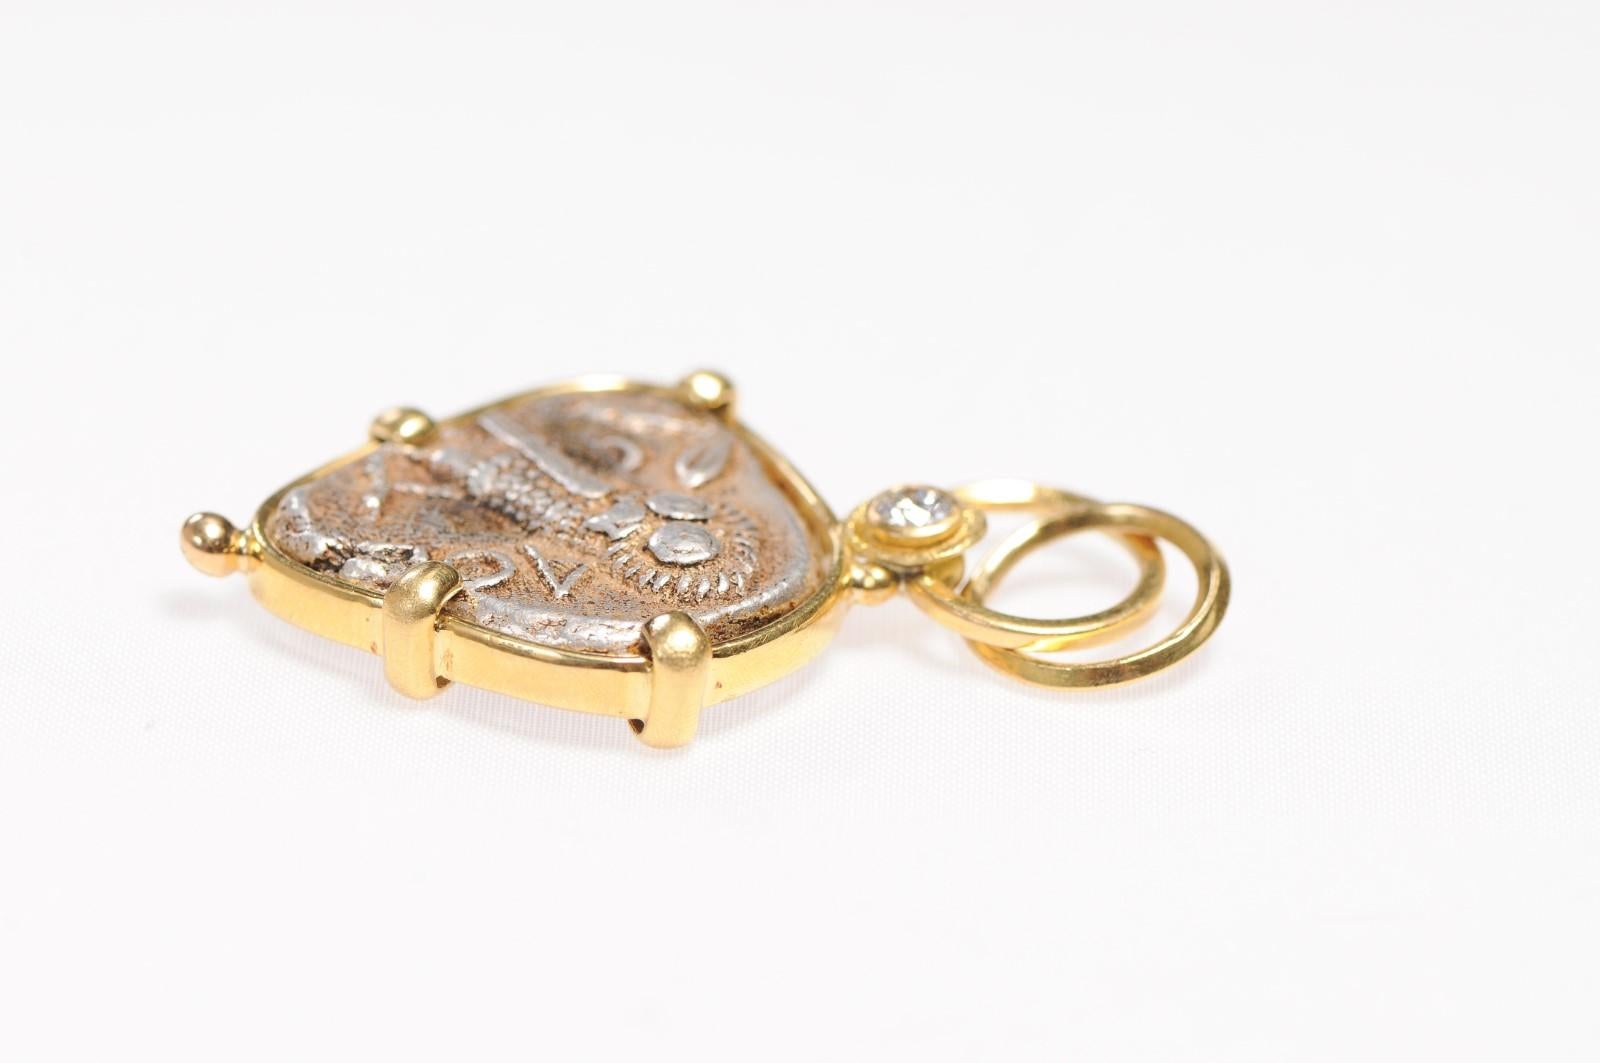 Ancient Owl Pendant 22kt Gold w/Diamond (pendant only) For Sale 2